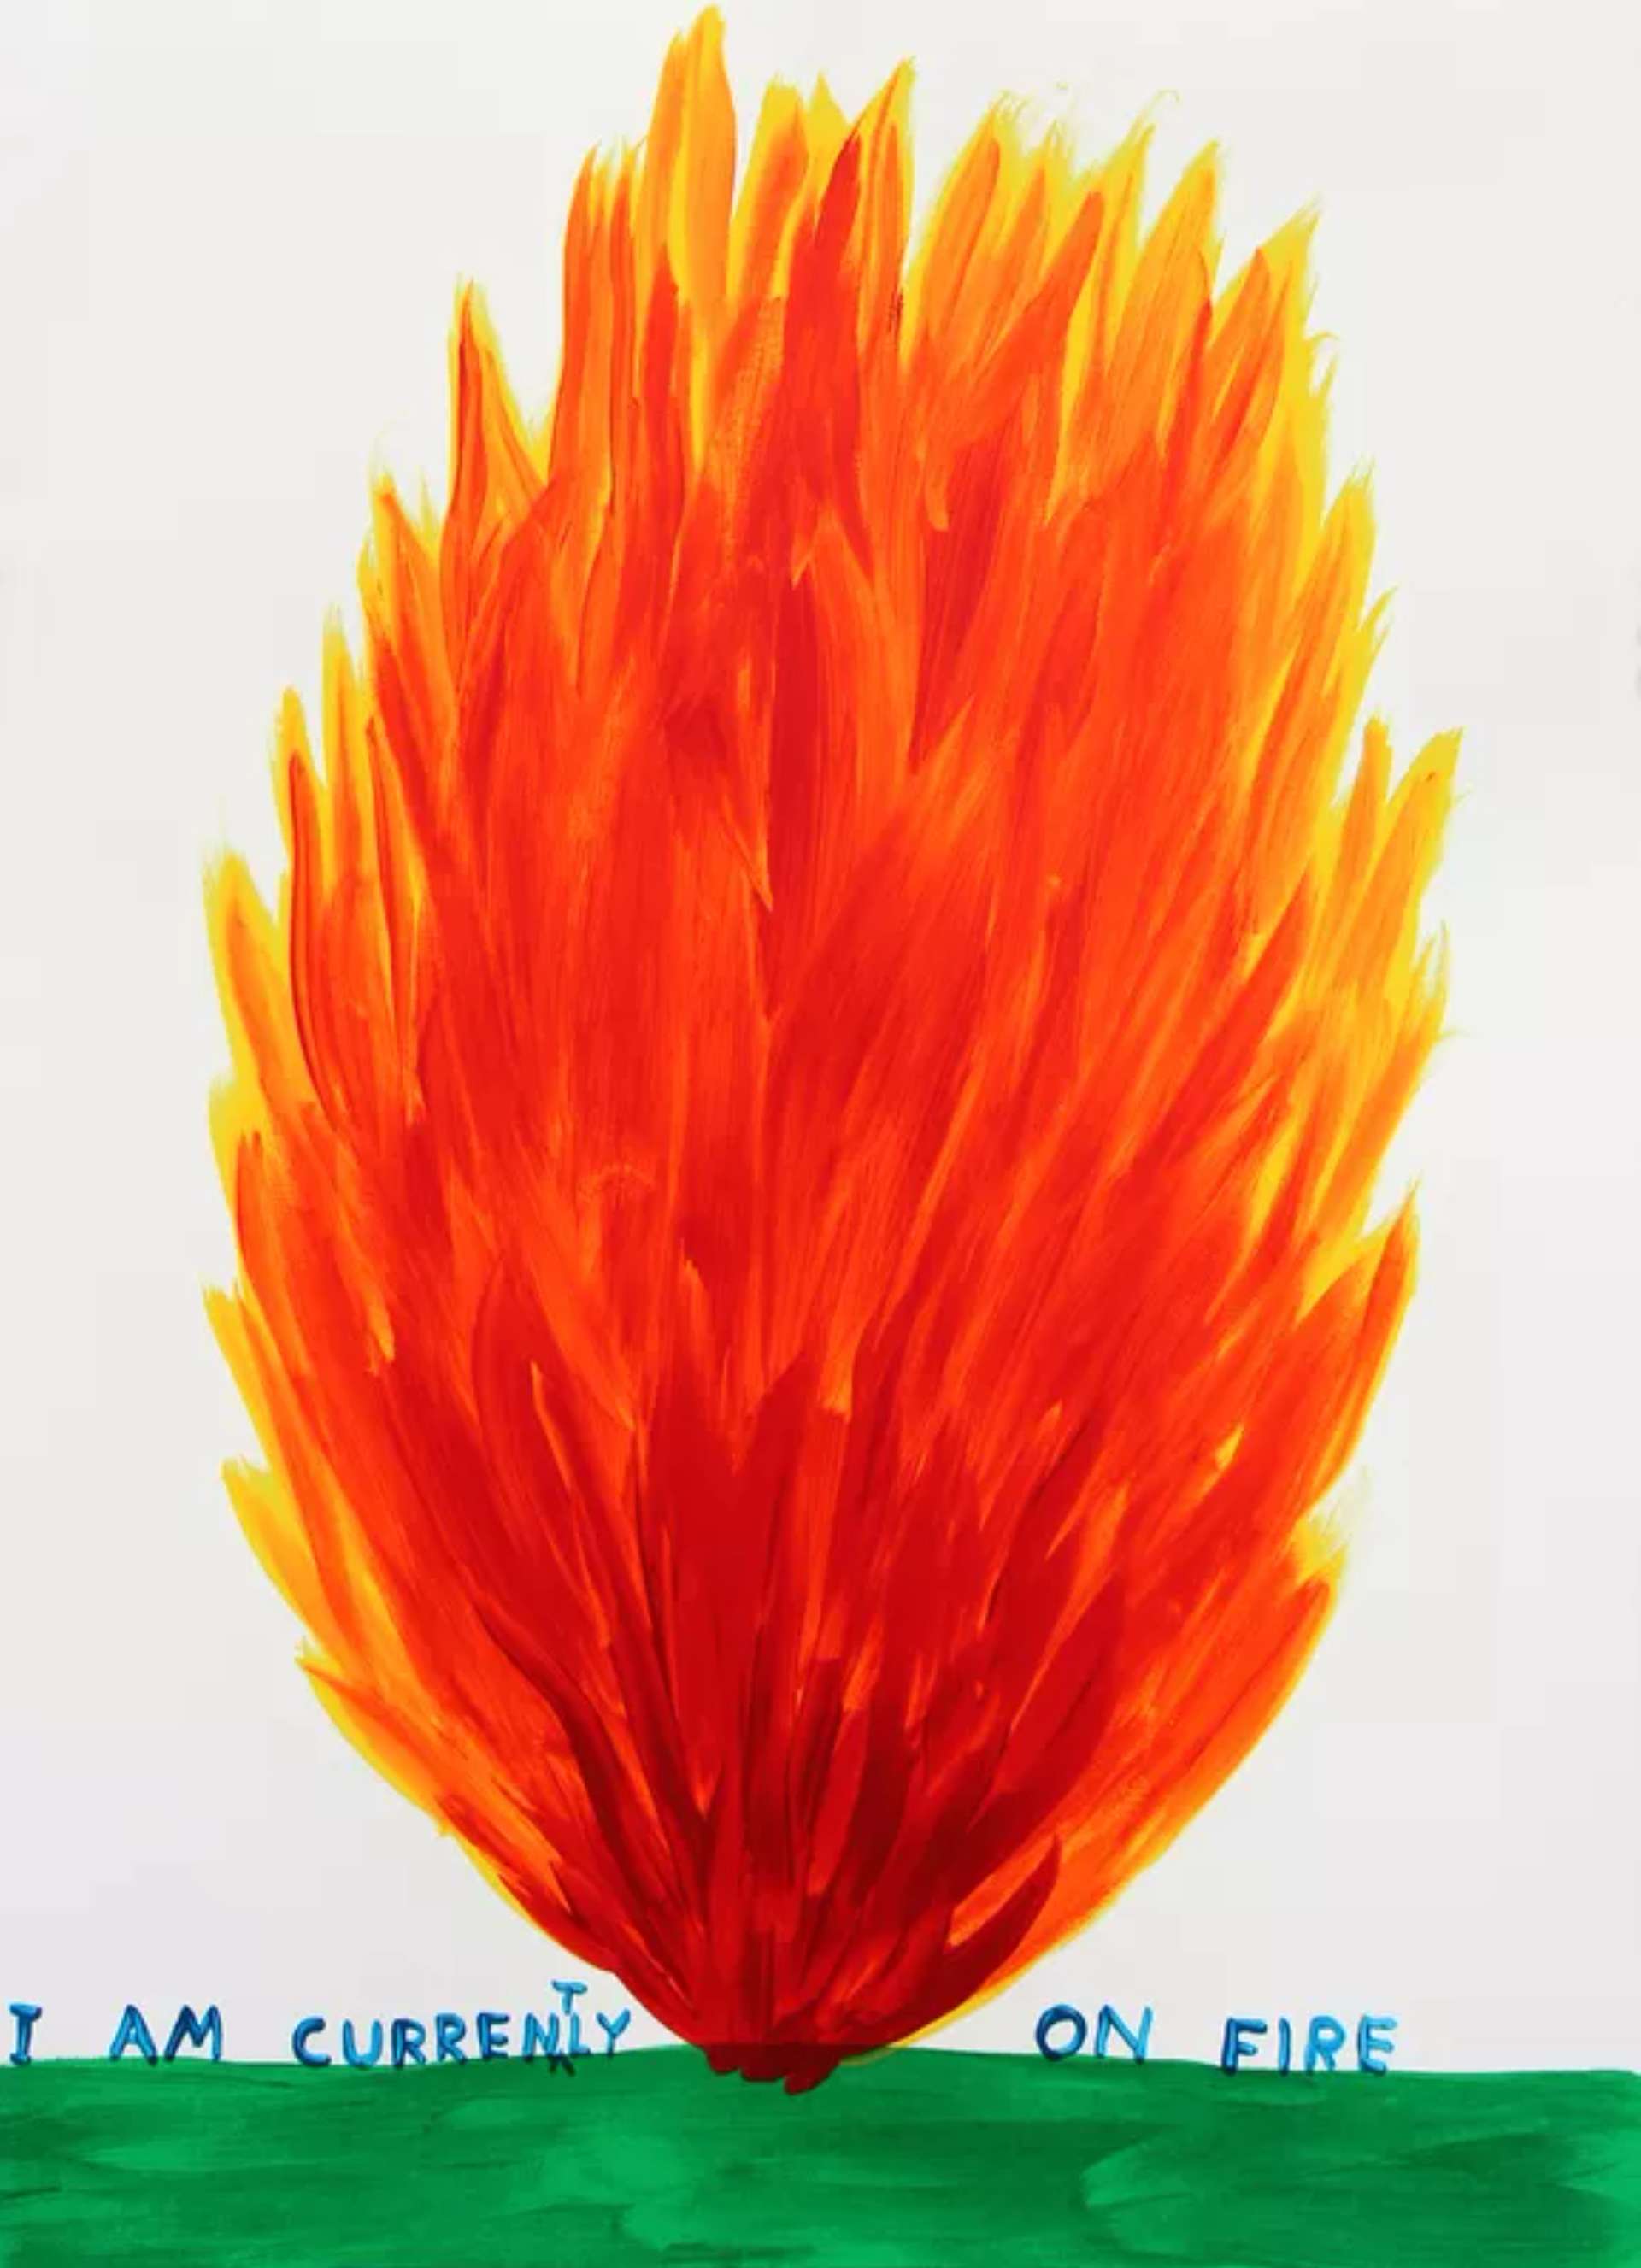 I Am Currently On Fire by David Shrigley